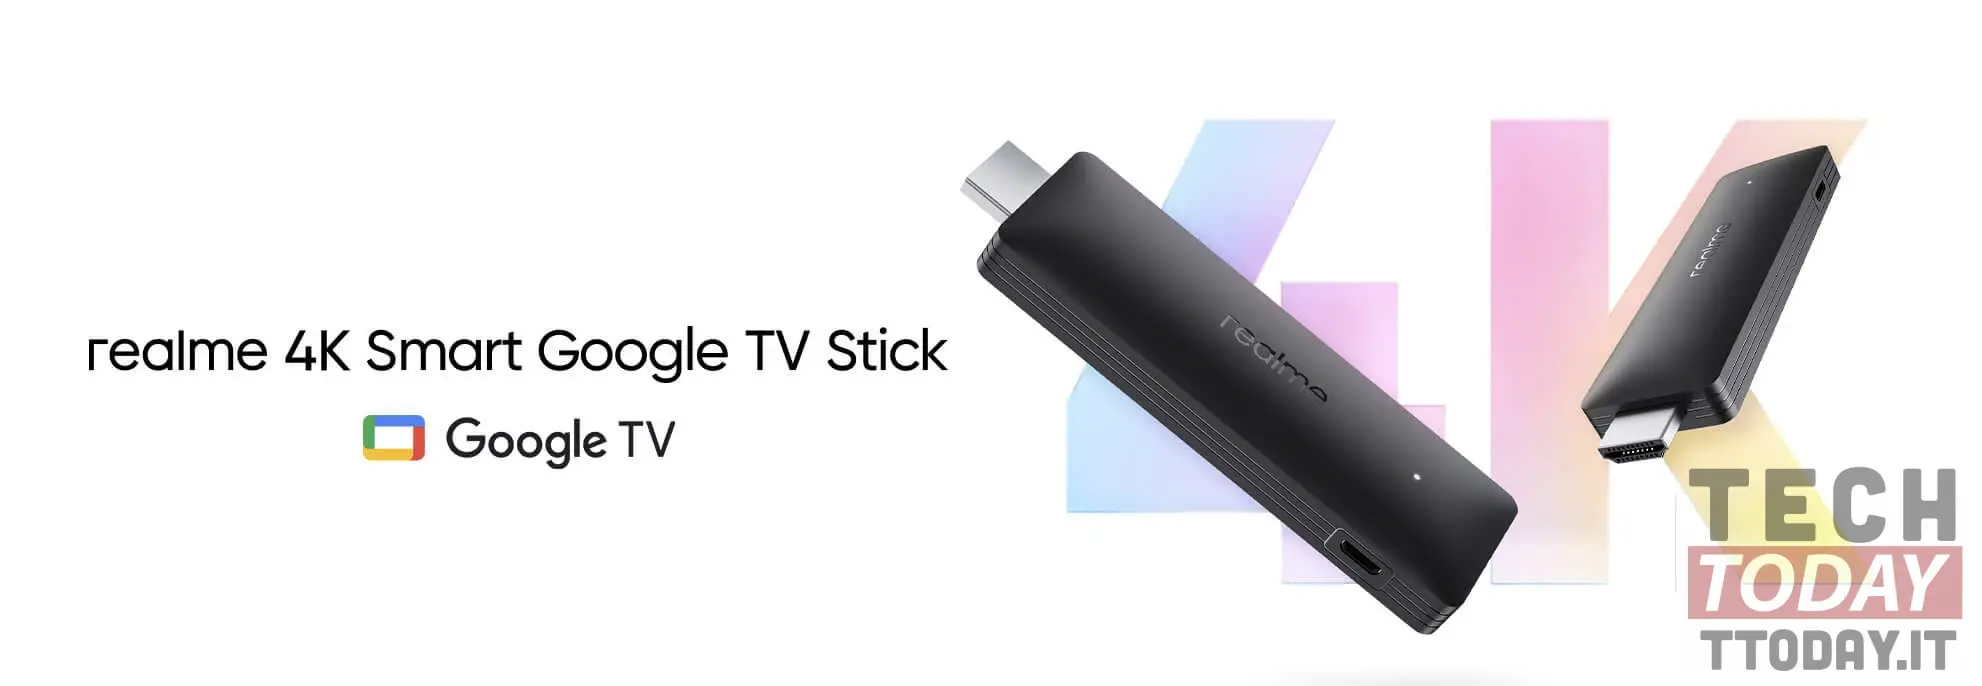 realme tv stick 4k станет альтернативой google chromecast